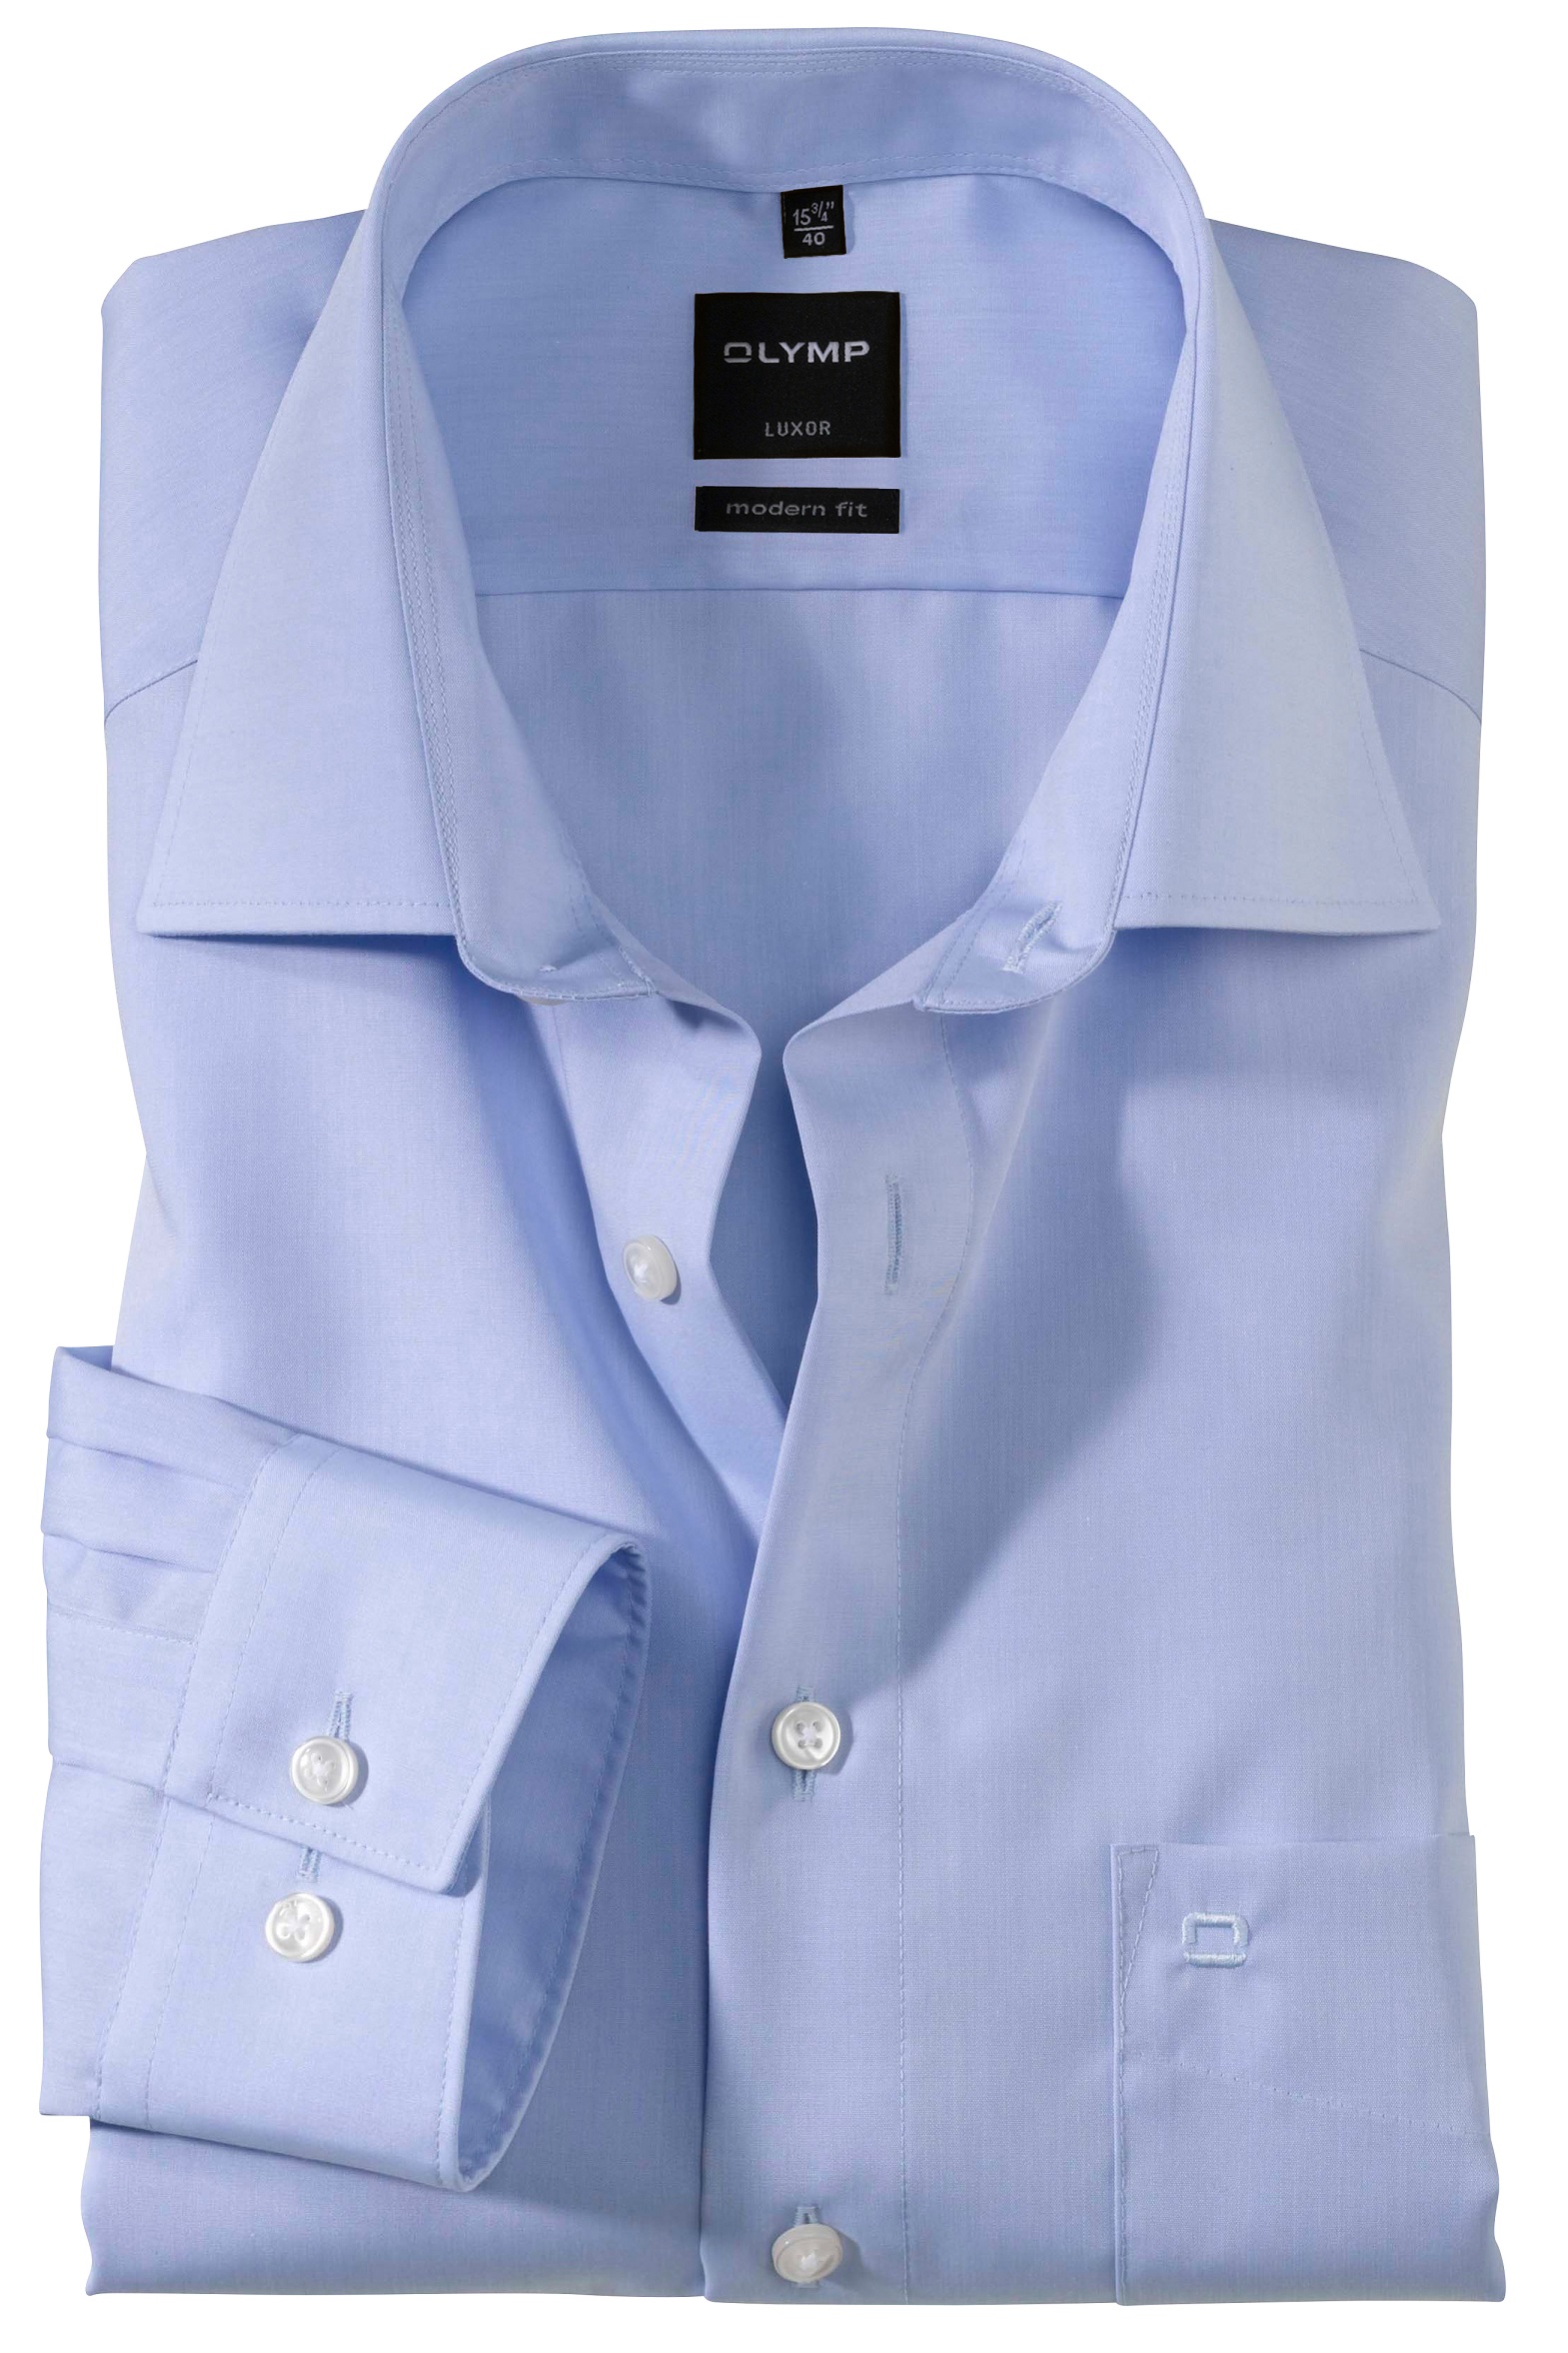 OLYMP Hemden, Extra langer Arm 69 cm, Luxor modern fit, Hellblau | Hosenträger